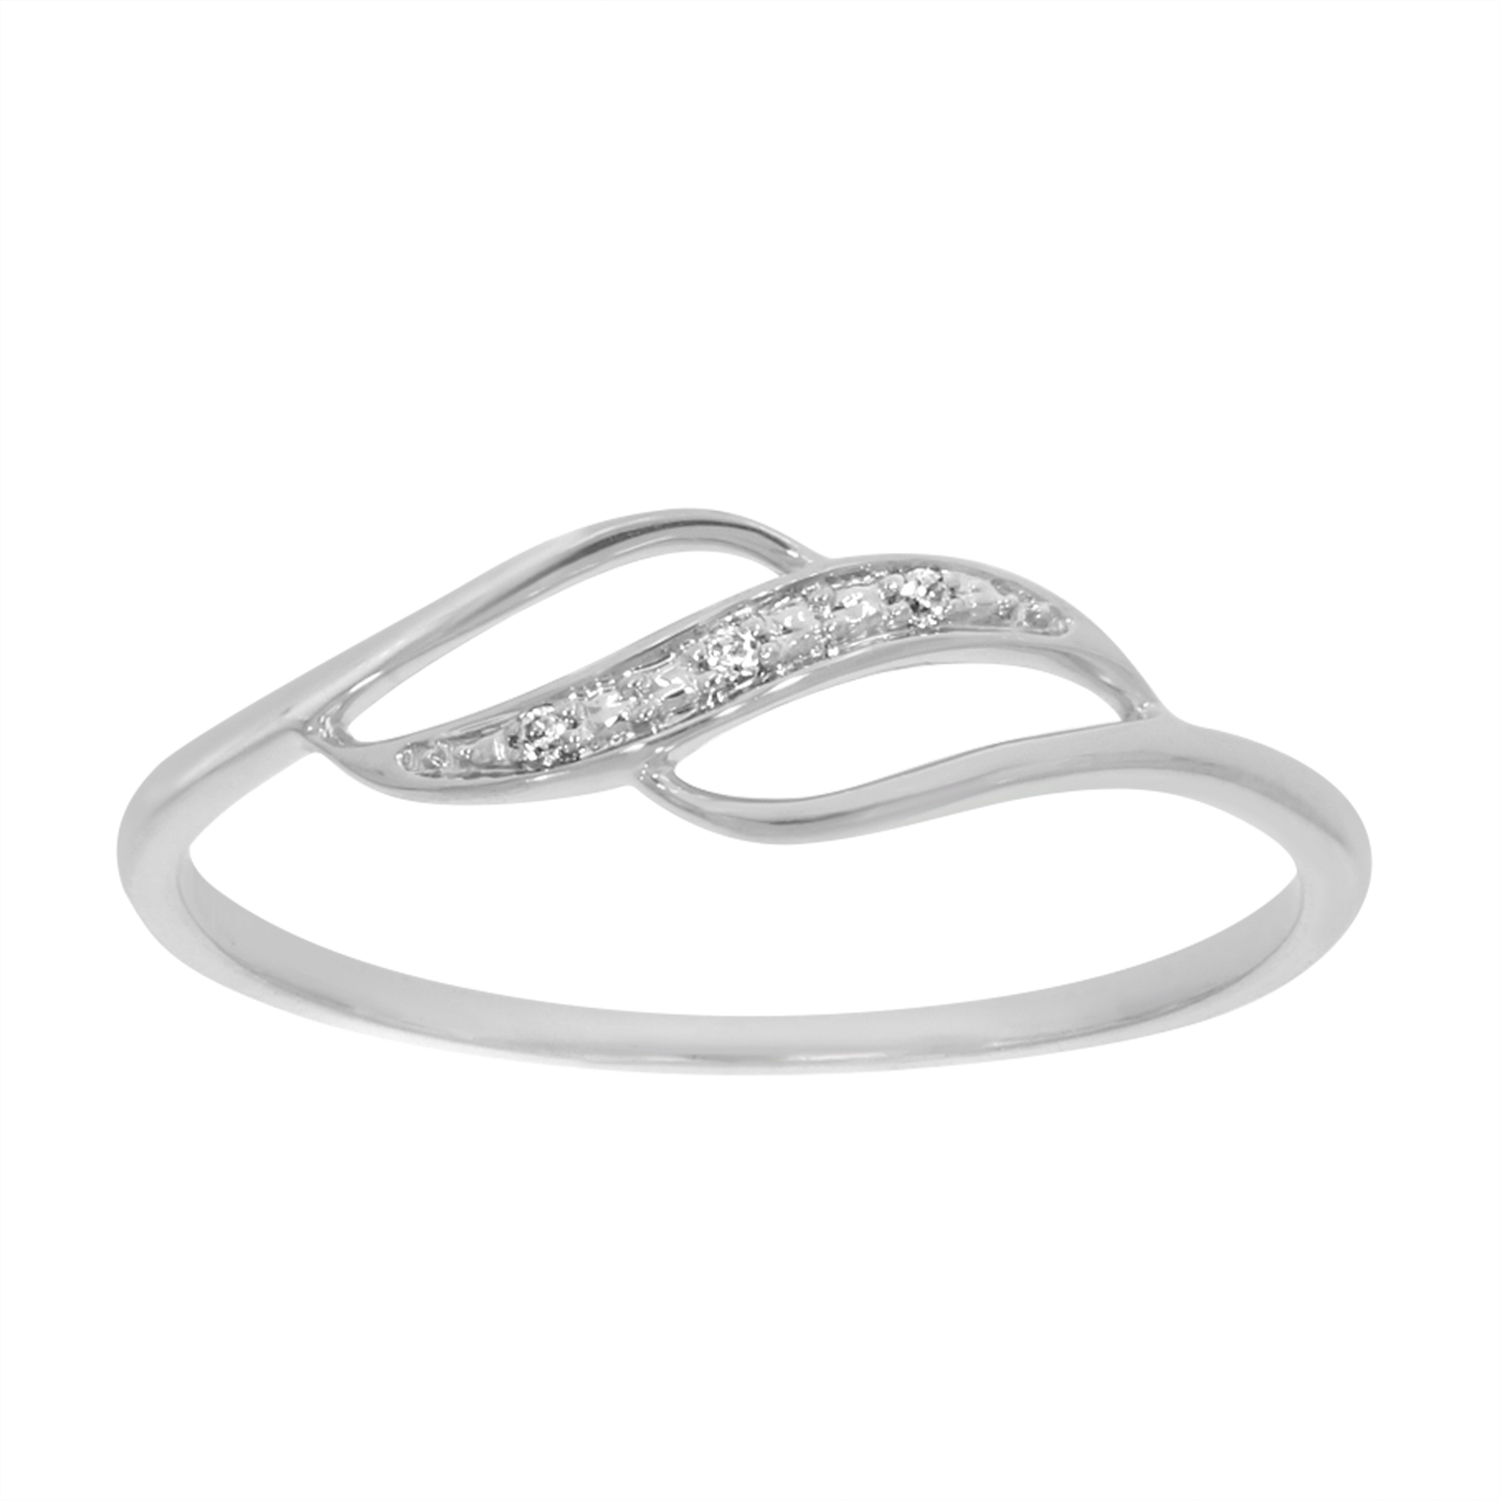 9ct White Gold Diamond Ring with 3 Briliiant Diamonds